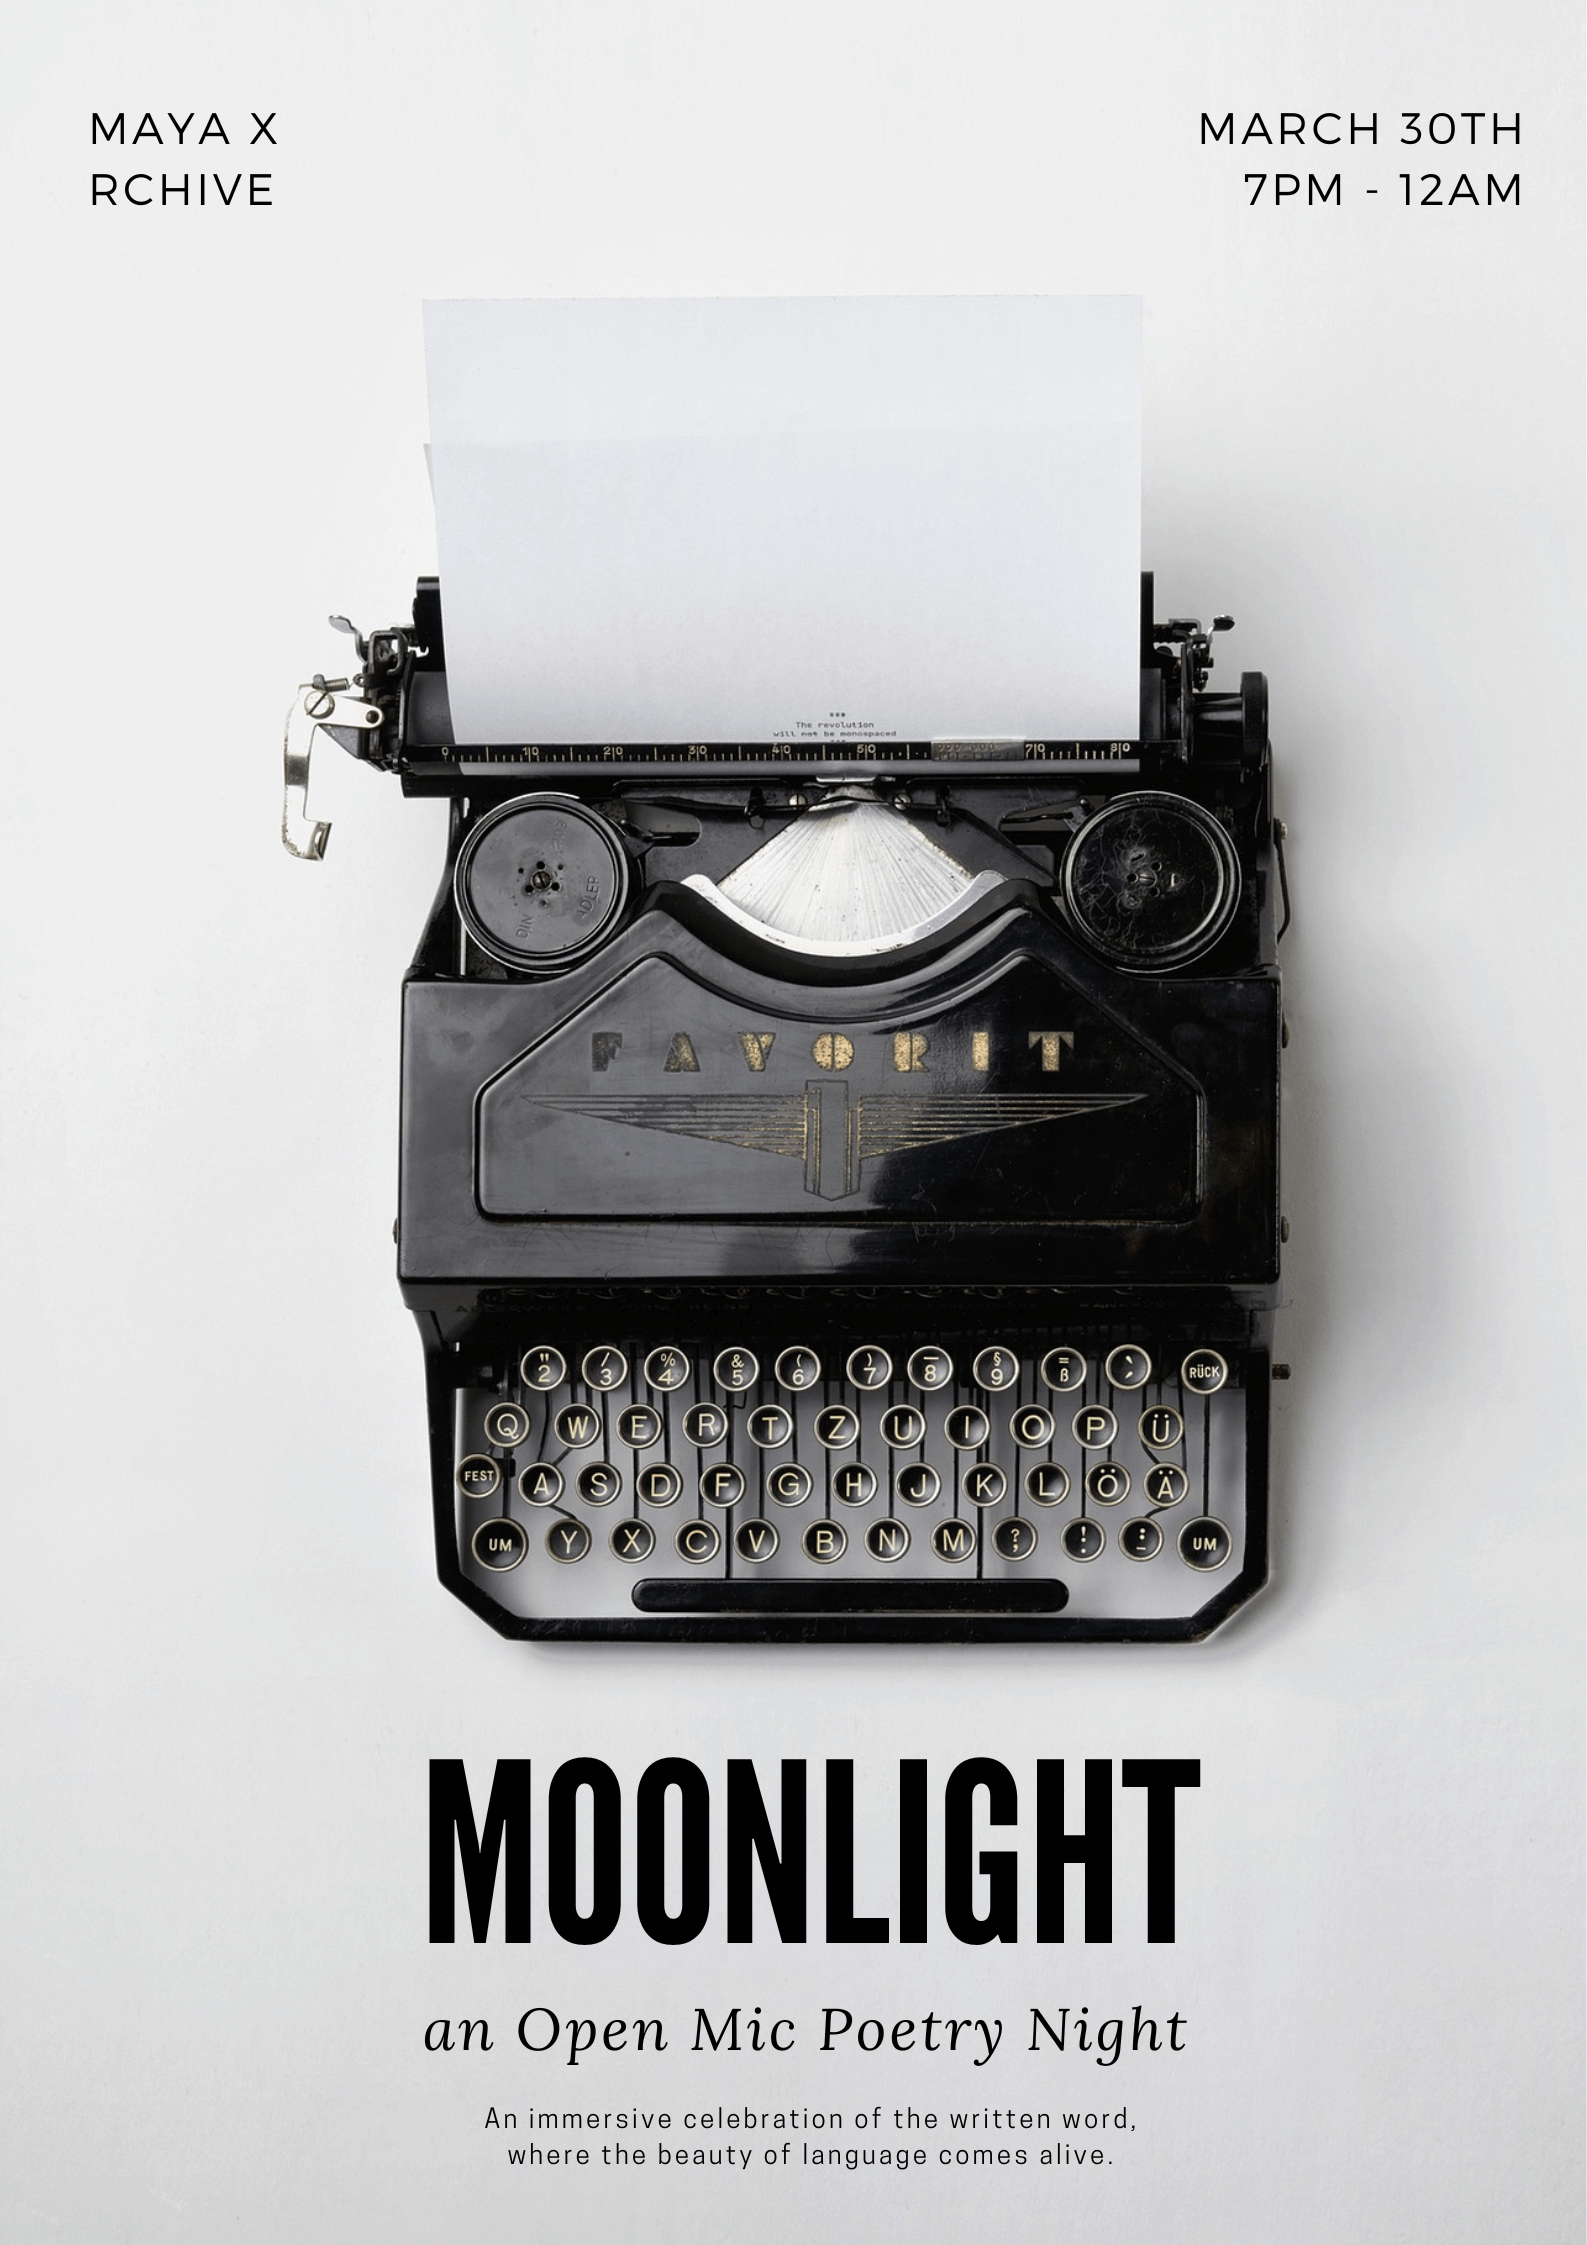 MOONLIGHT - an Open Mic Poetry Night